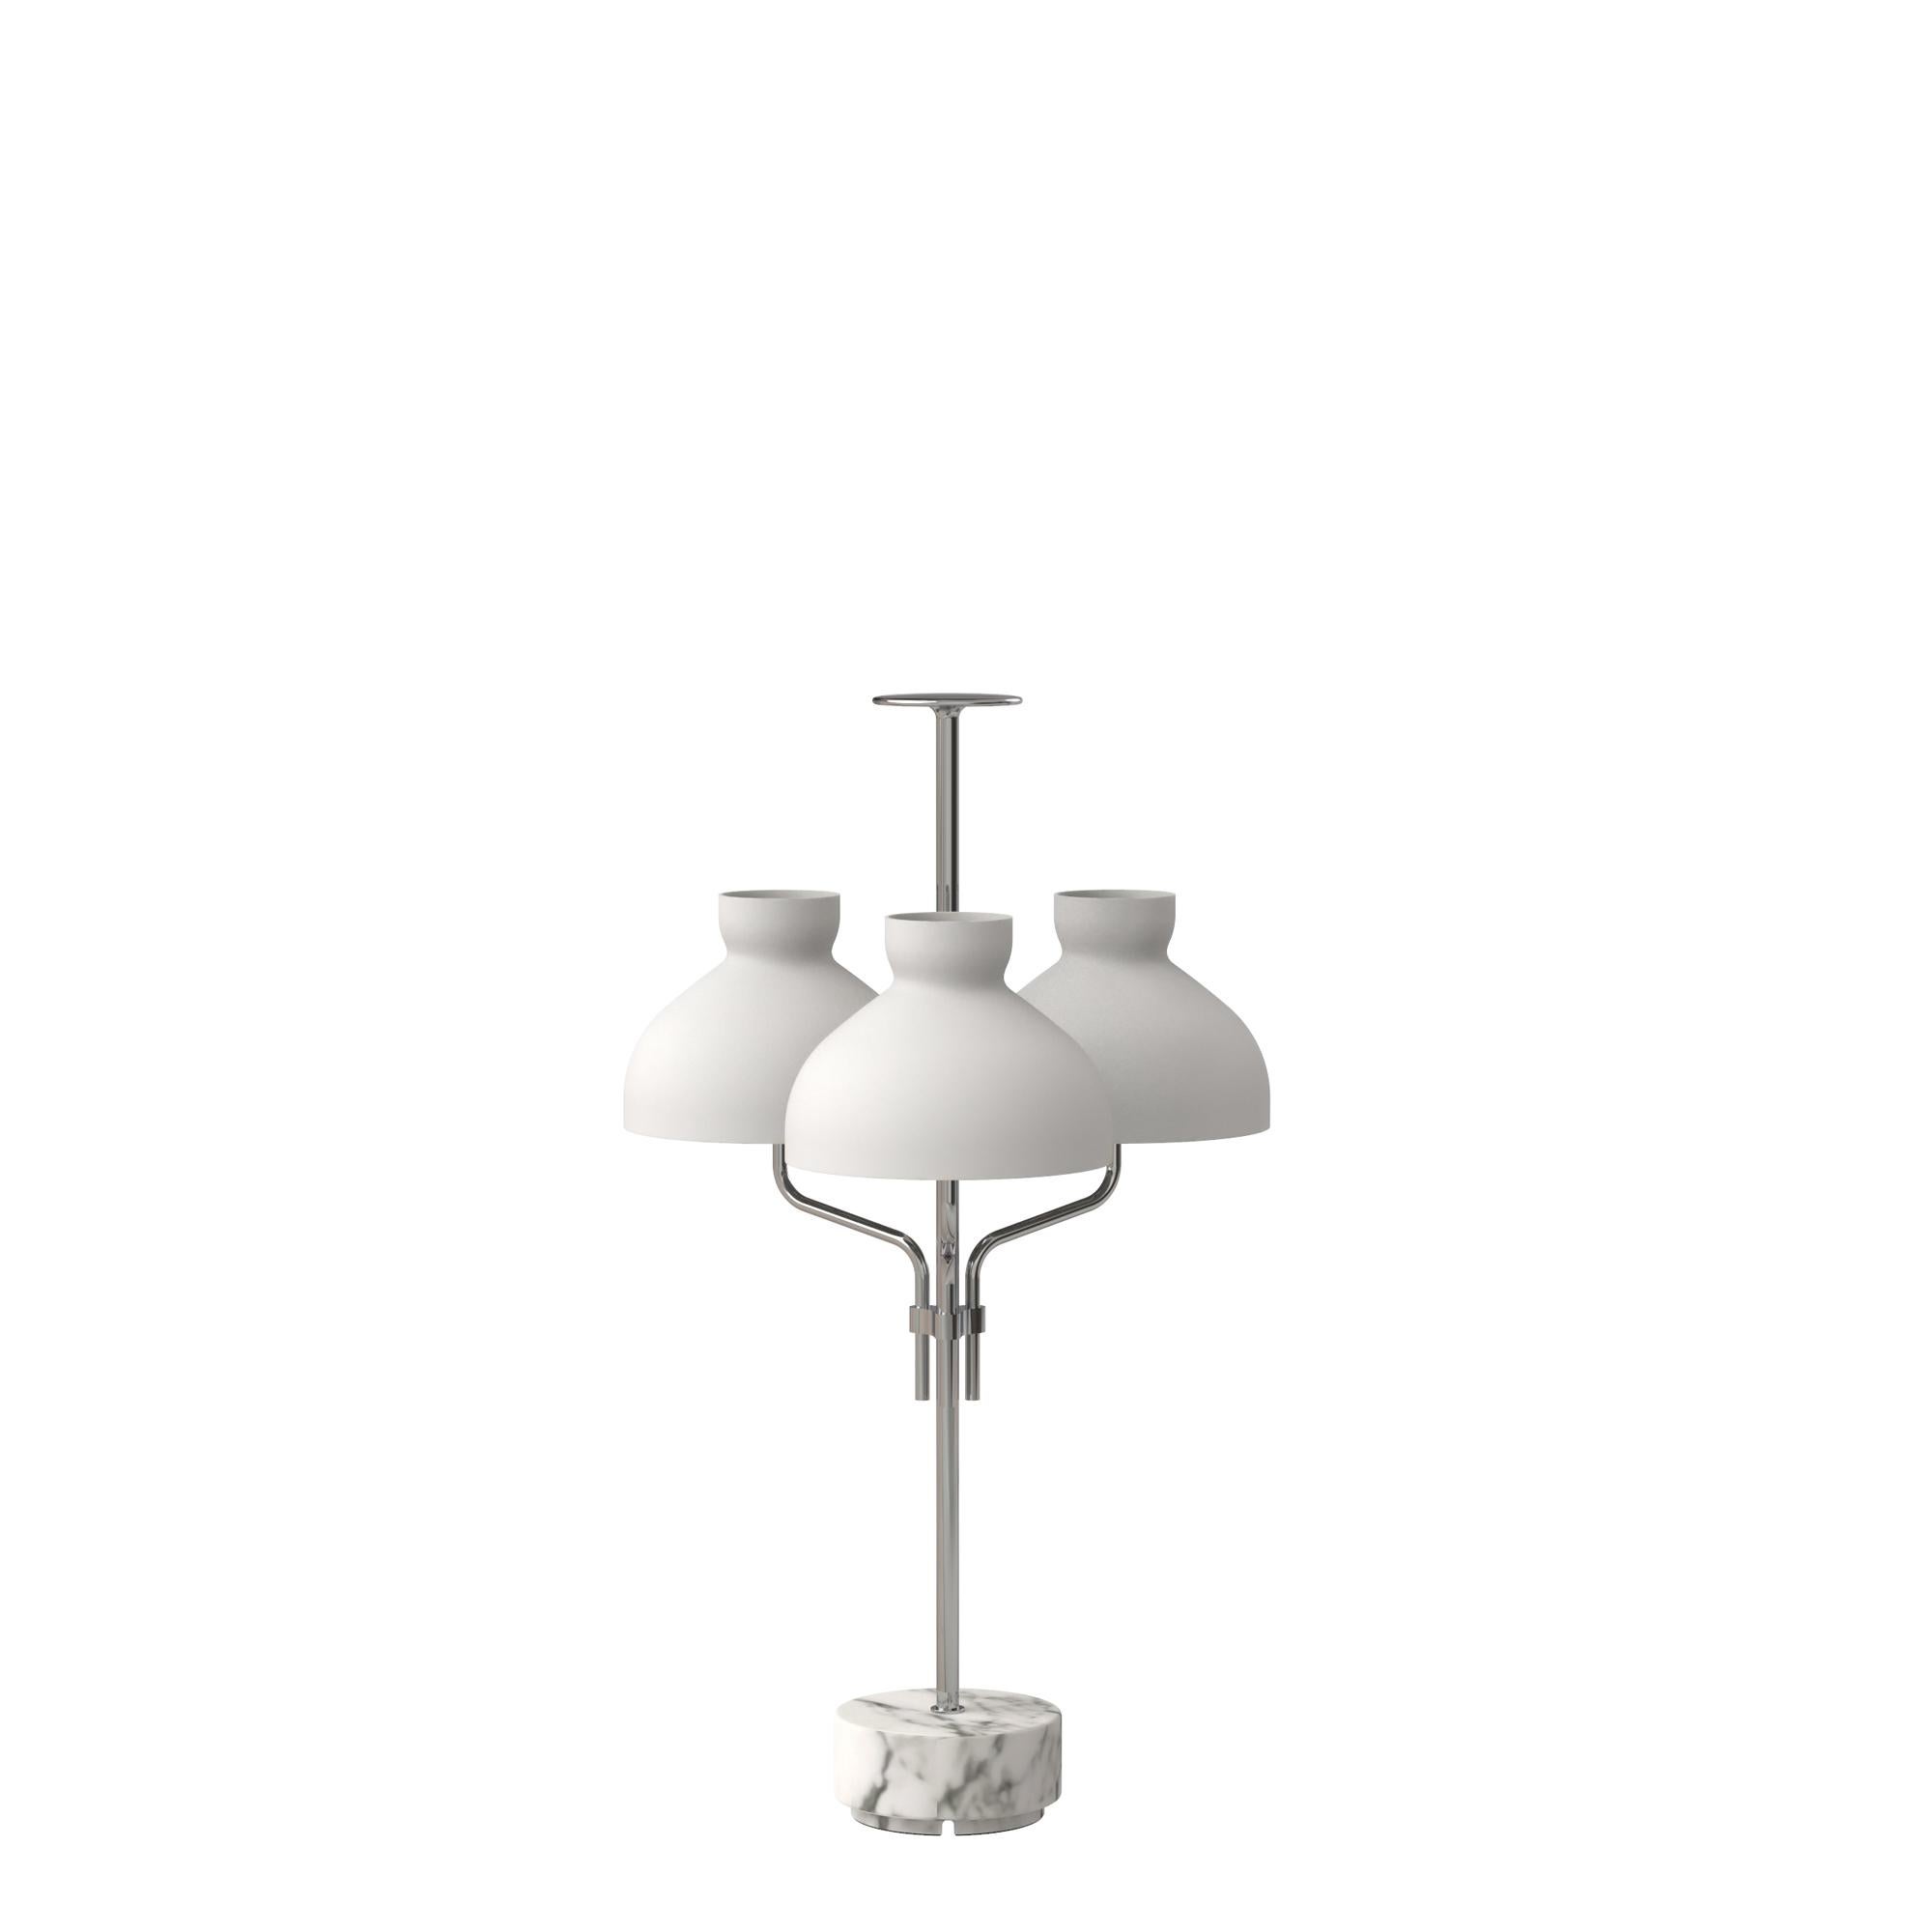 Ignazio Gardella 'Arenzano Tre Fiamme' Table Lamp in White Marble and Chrome In New Condition For Sale In Glendale, CA